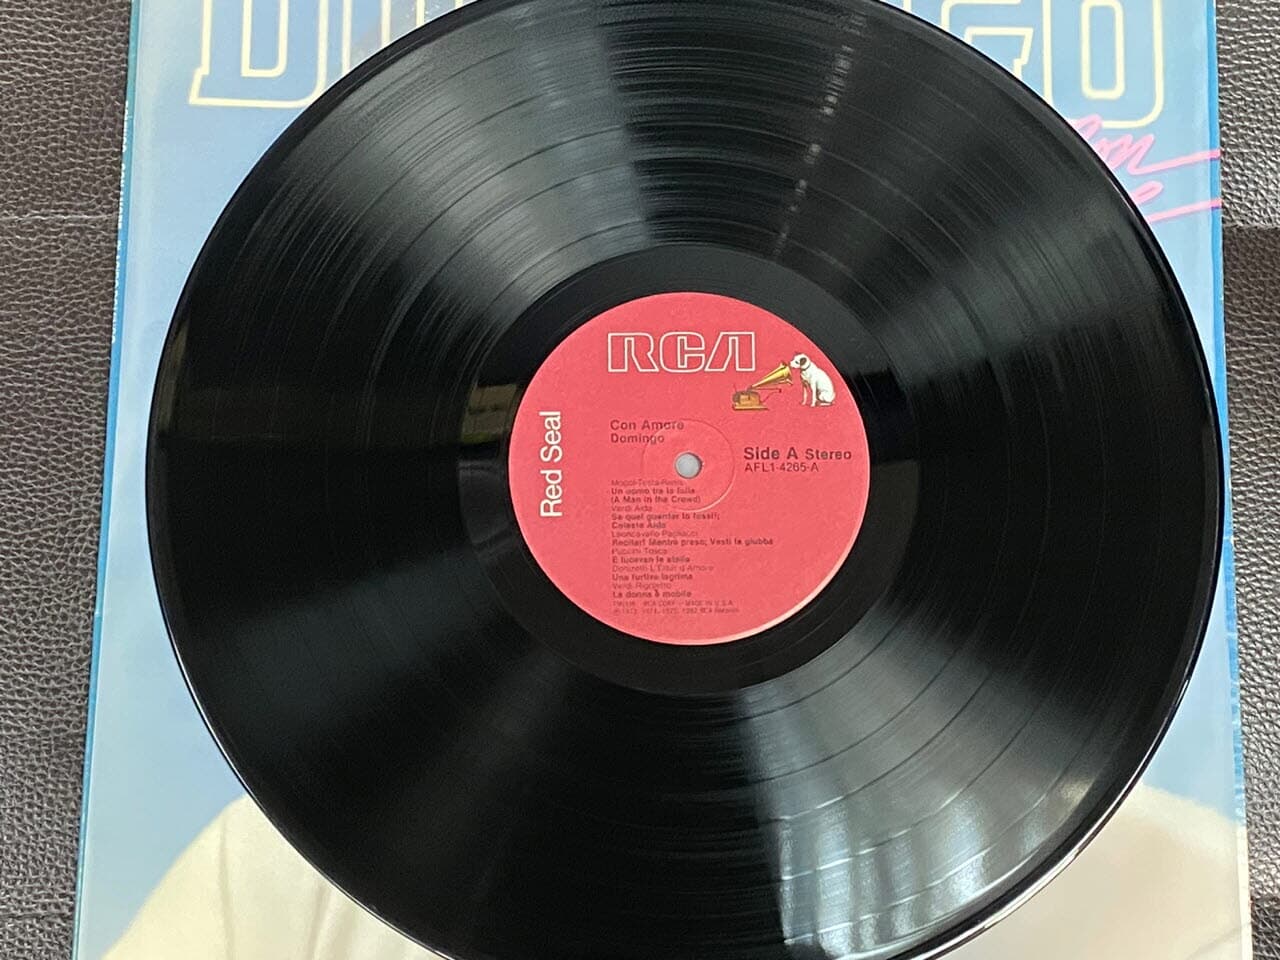 [LP] 플라시도 도밍고 - Placido Domingo - Domingo Con Amore LP [U.S반]